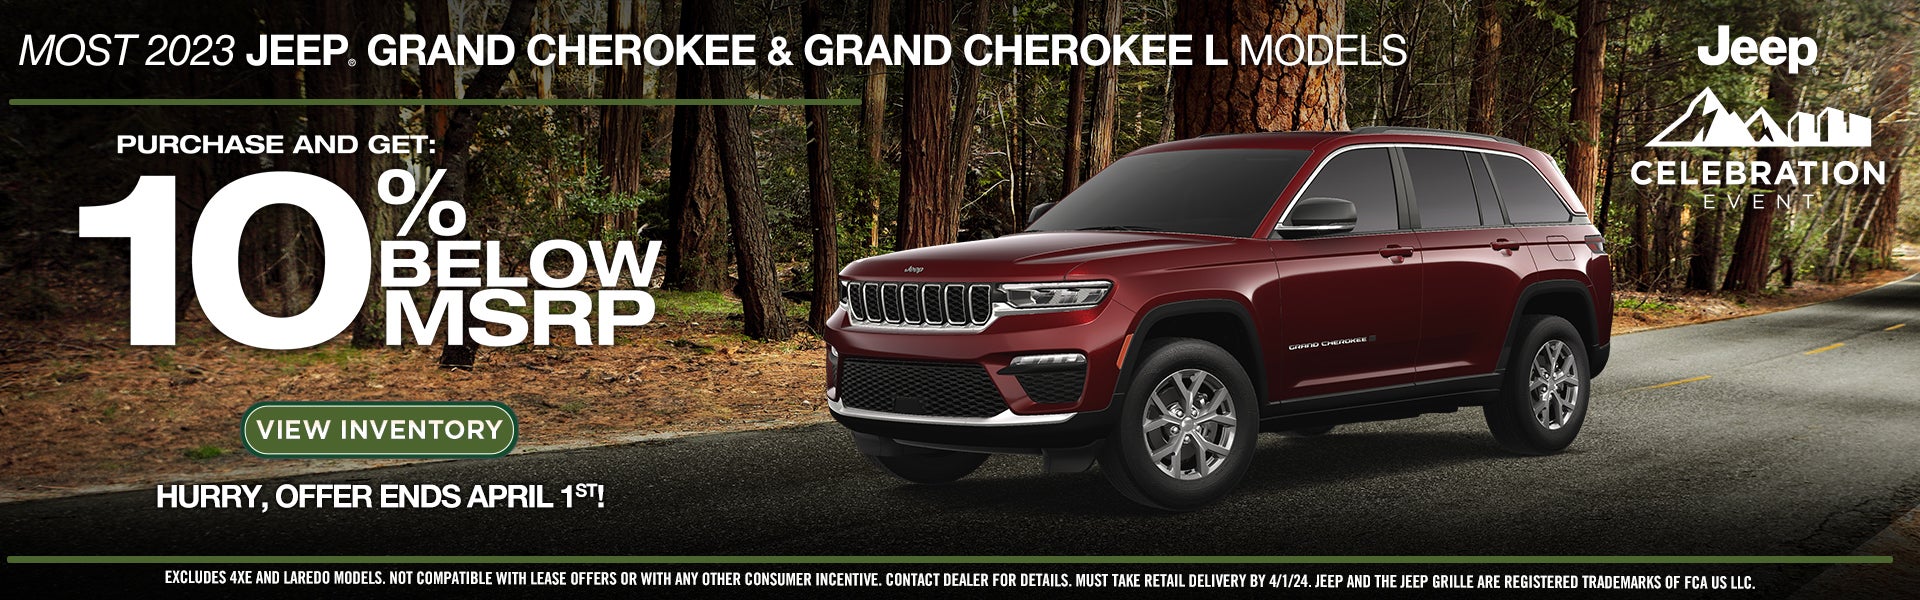 2023 Jeep Grand Cherokee & Grand Cherokee L